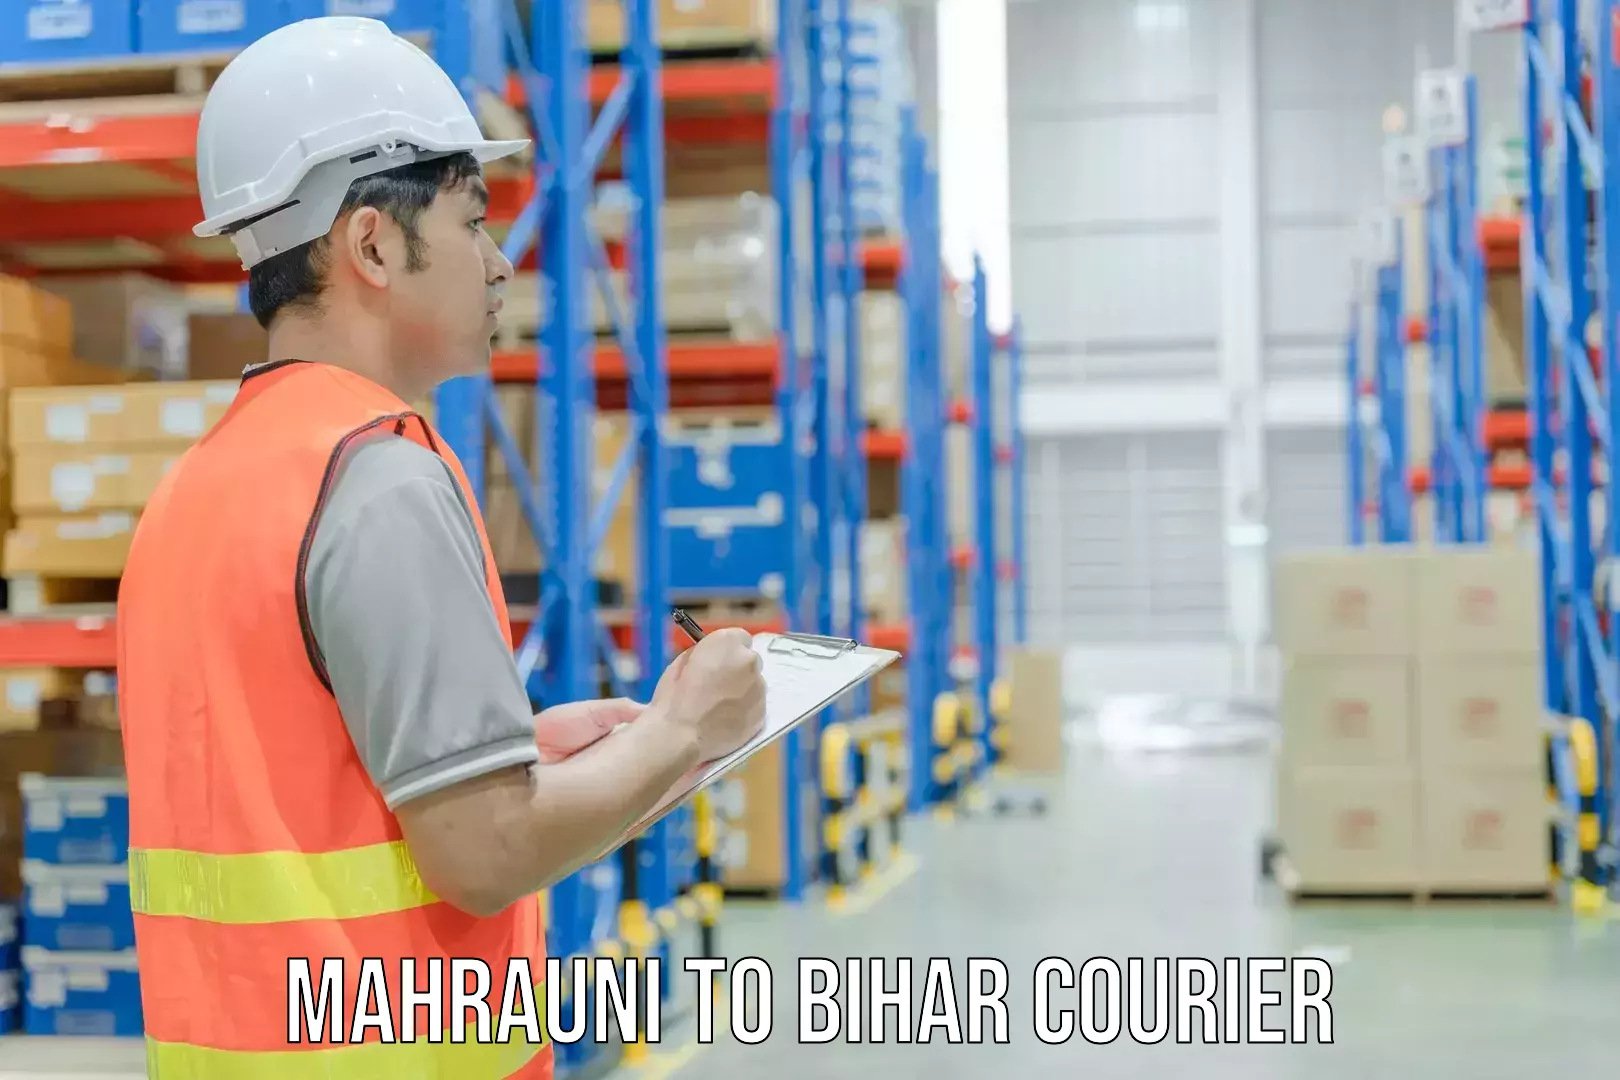 Courier service partnerships Mahrauni to Bihar